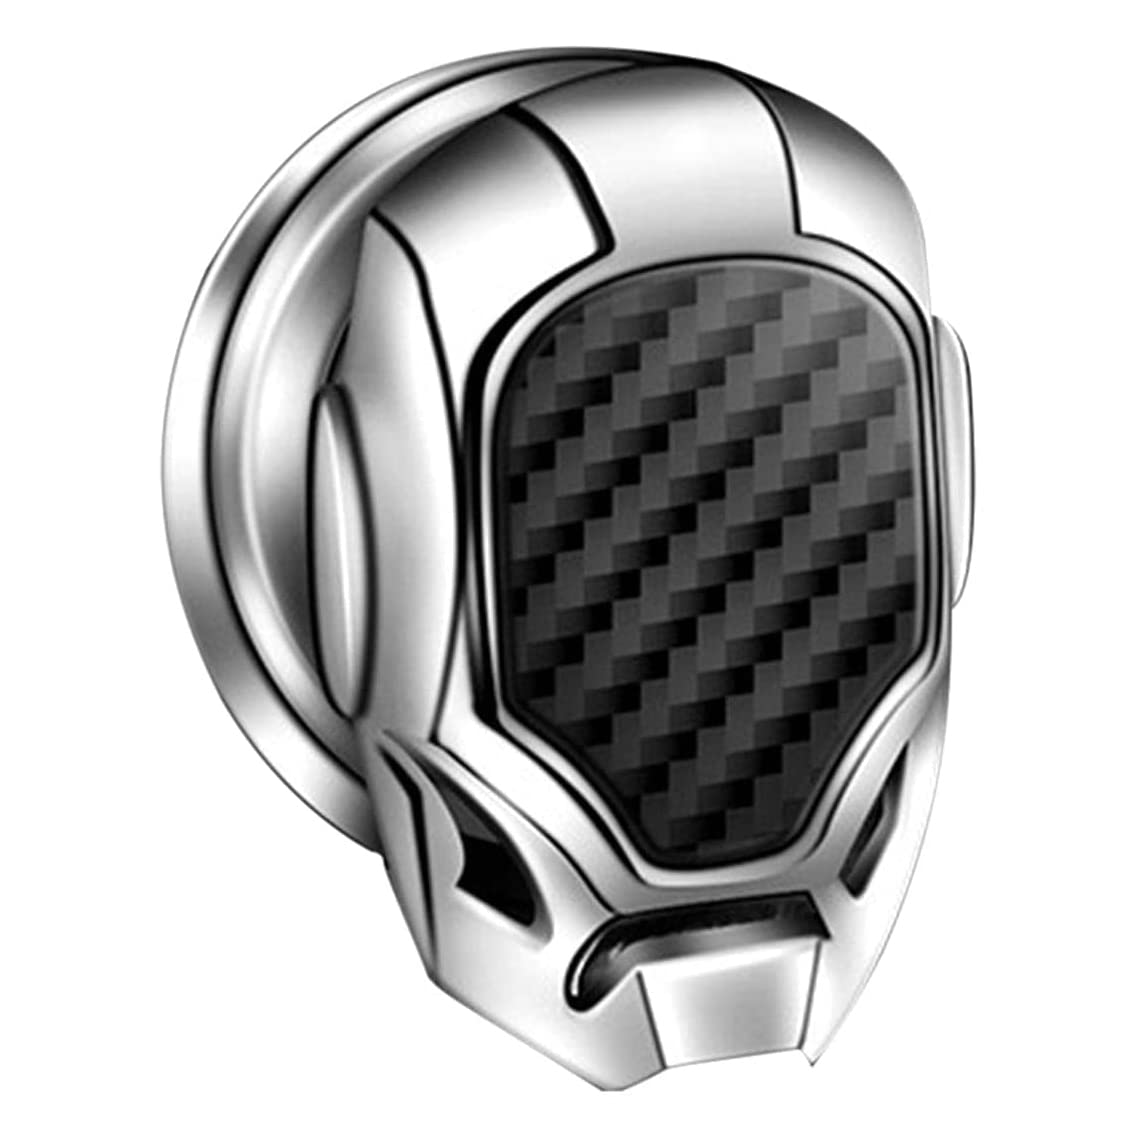 Peowuieu Auto Knopf Abdeckung Universal Auto Ring Auto Knopf Motor Abdeckung für Auto Innenraum von Peowuieu